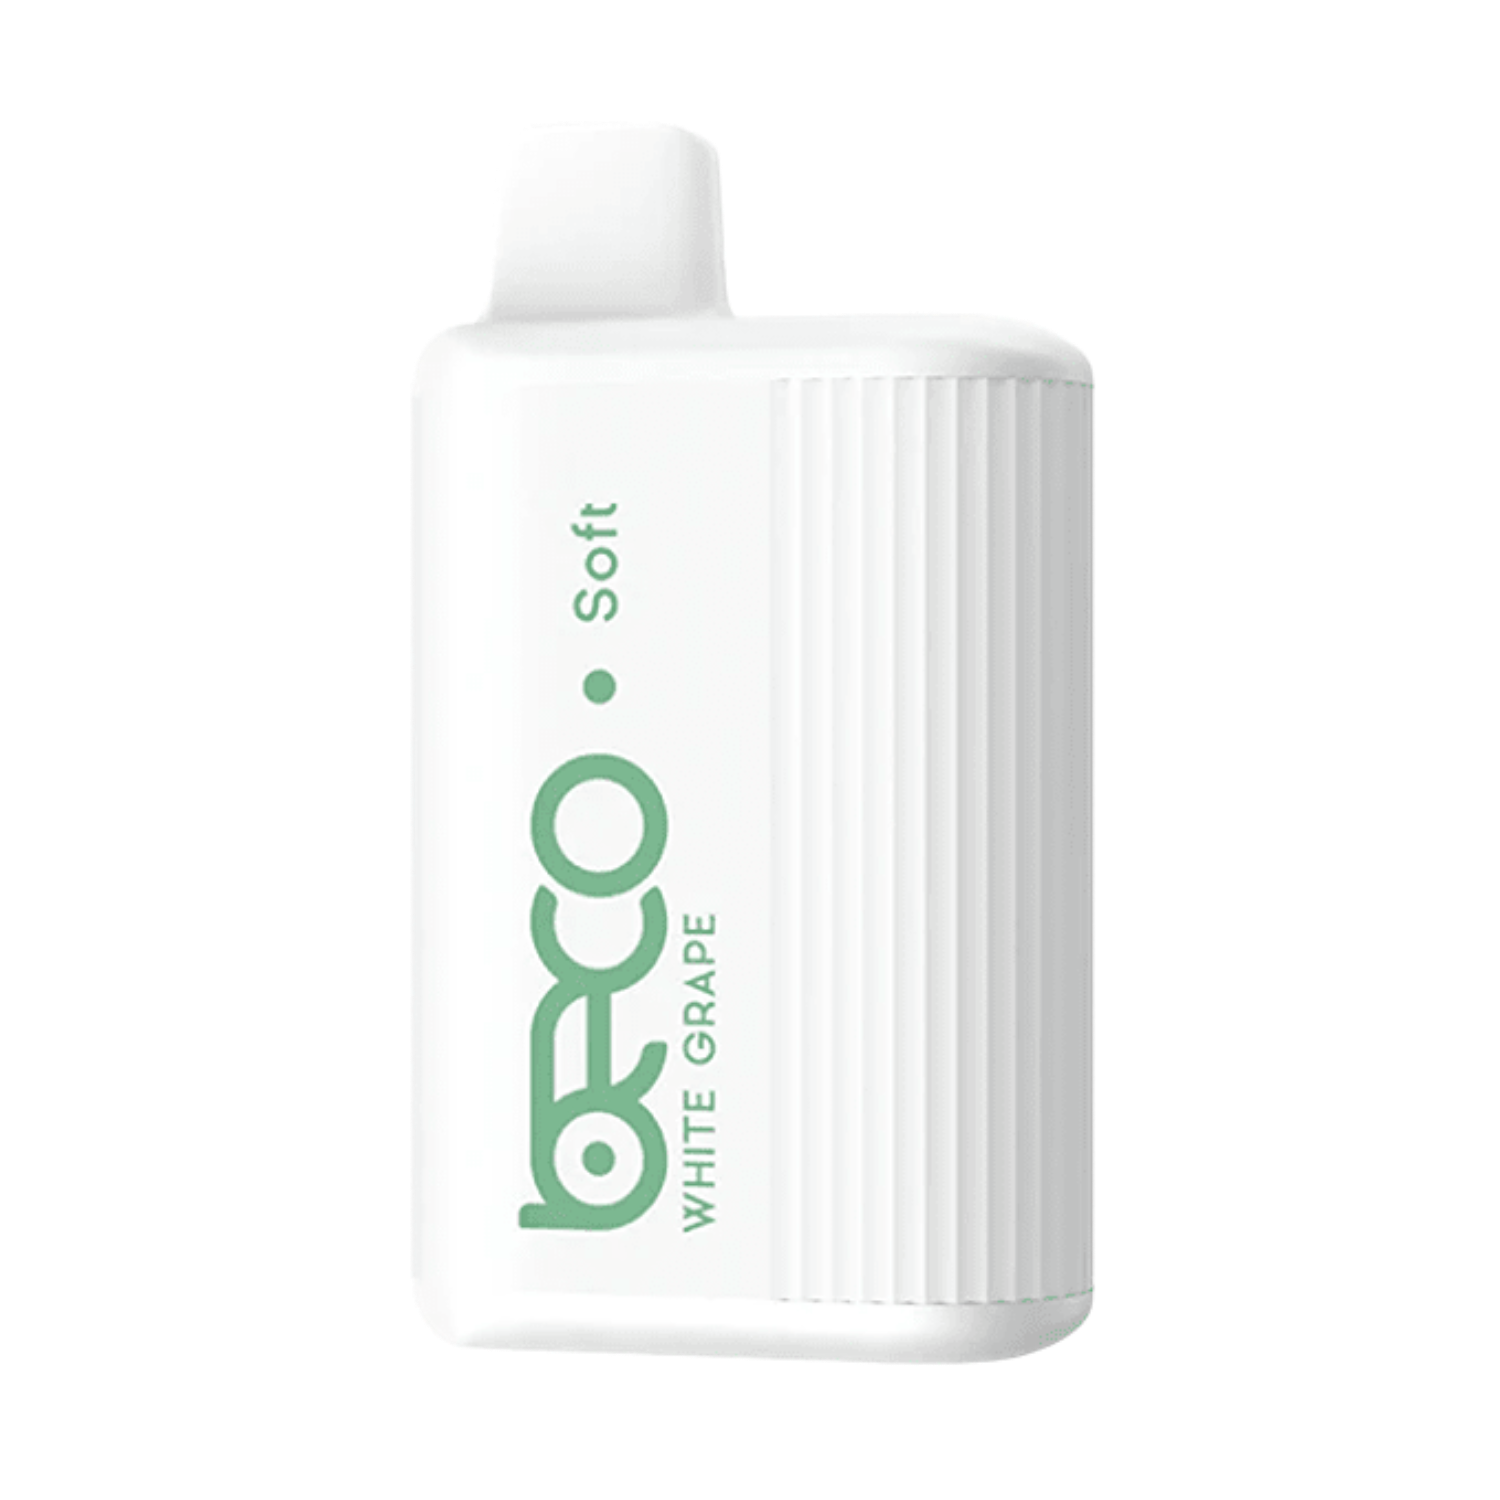 Beco Soft- Uva Blanca